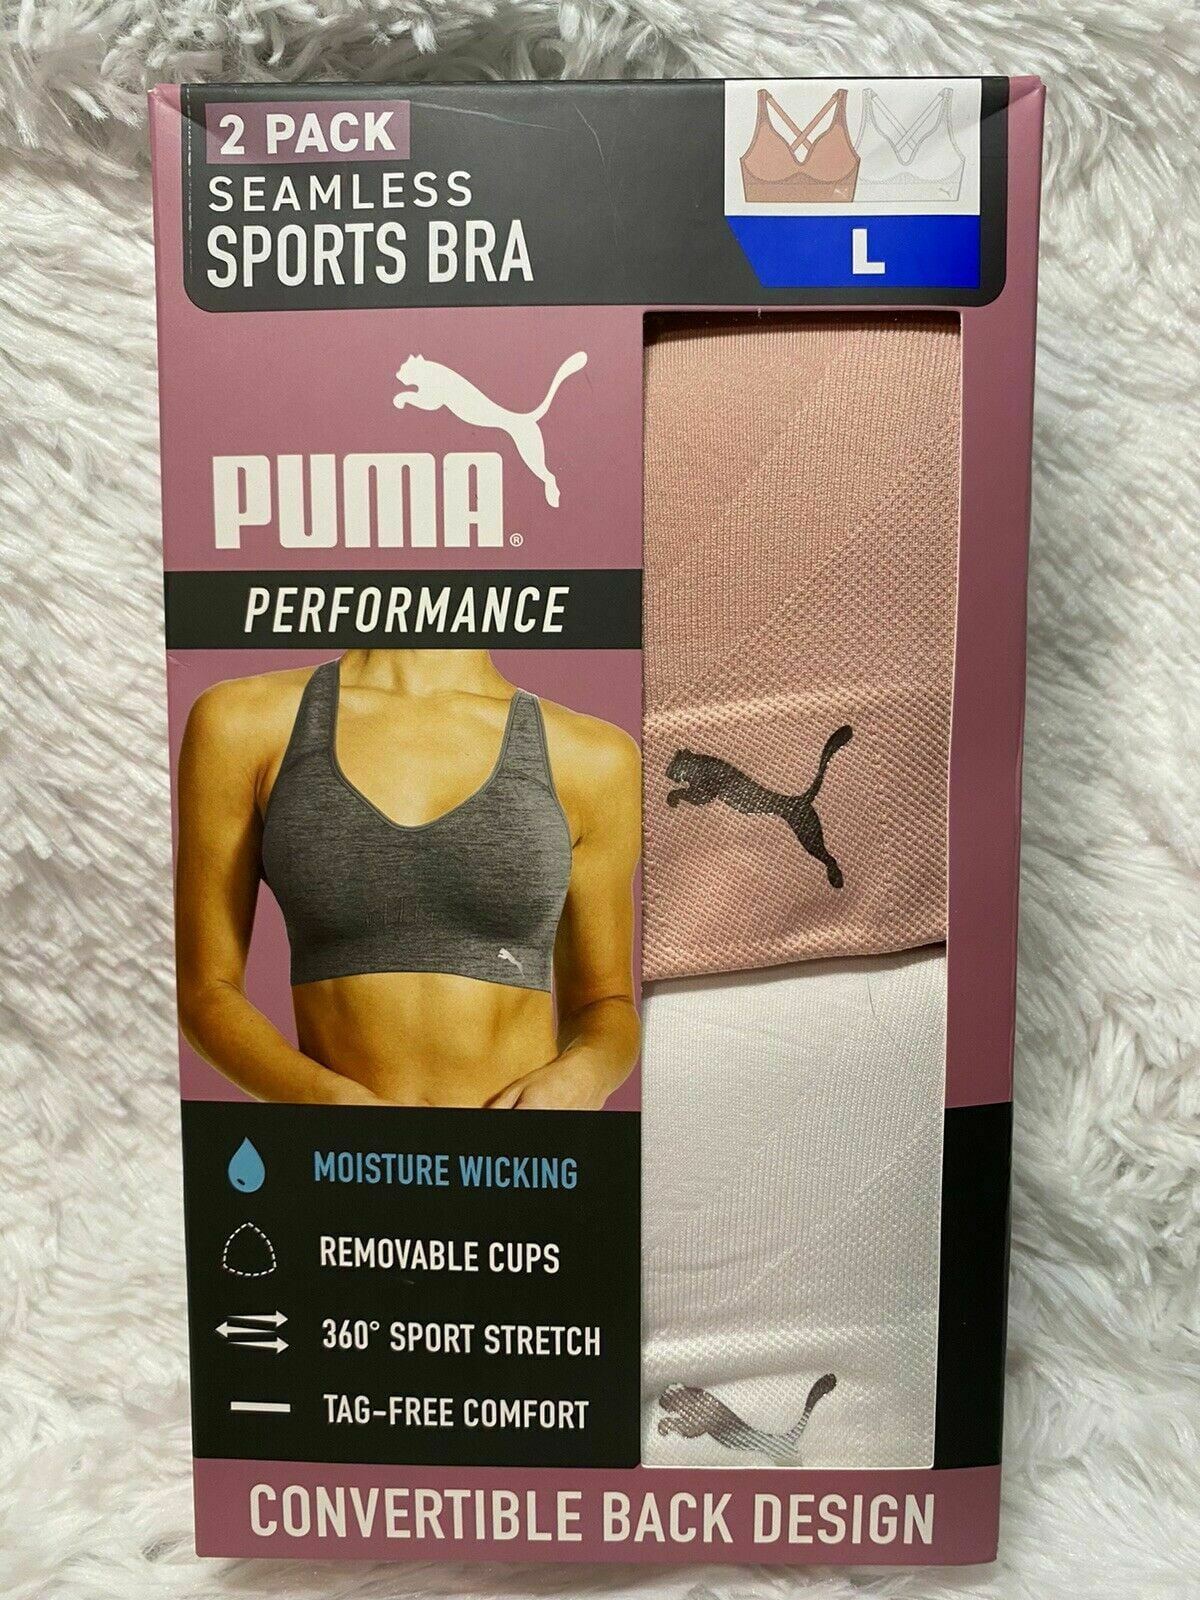 Puma Women's Performance Seamless Sports Bra, 2 Pack in B